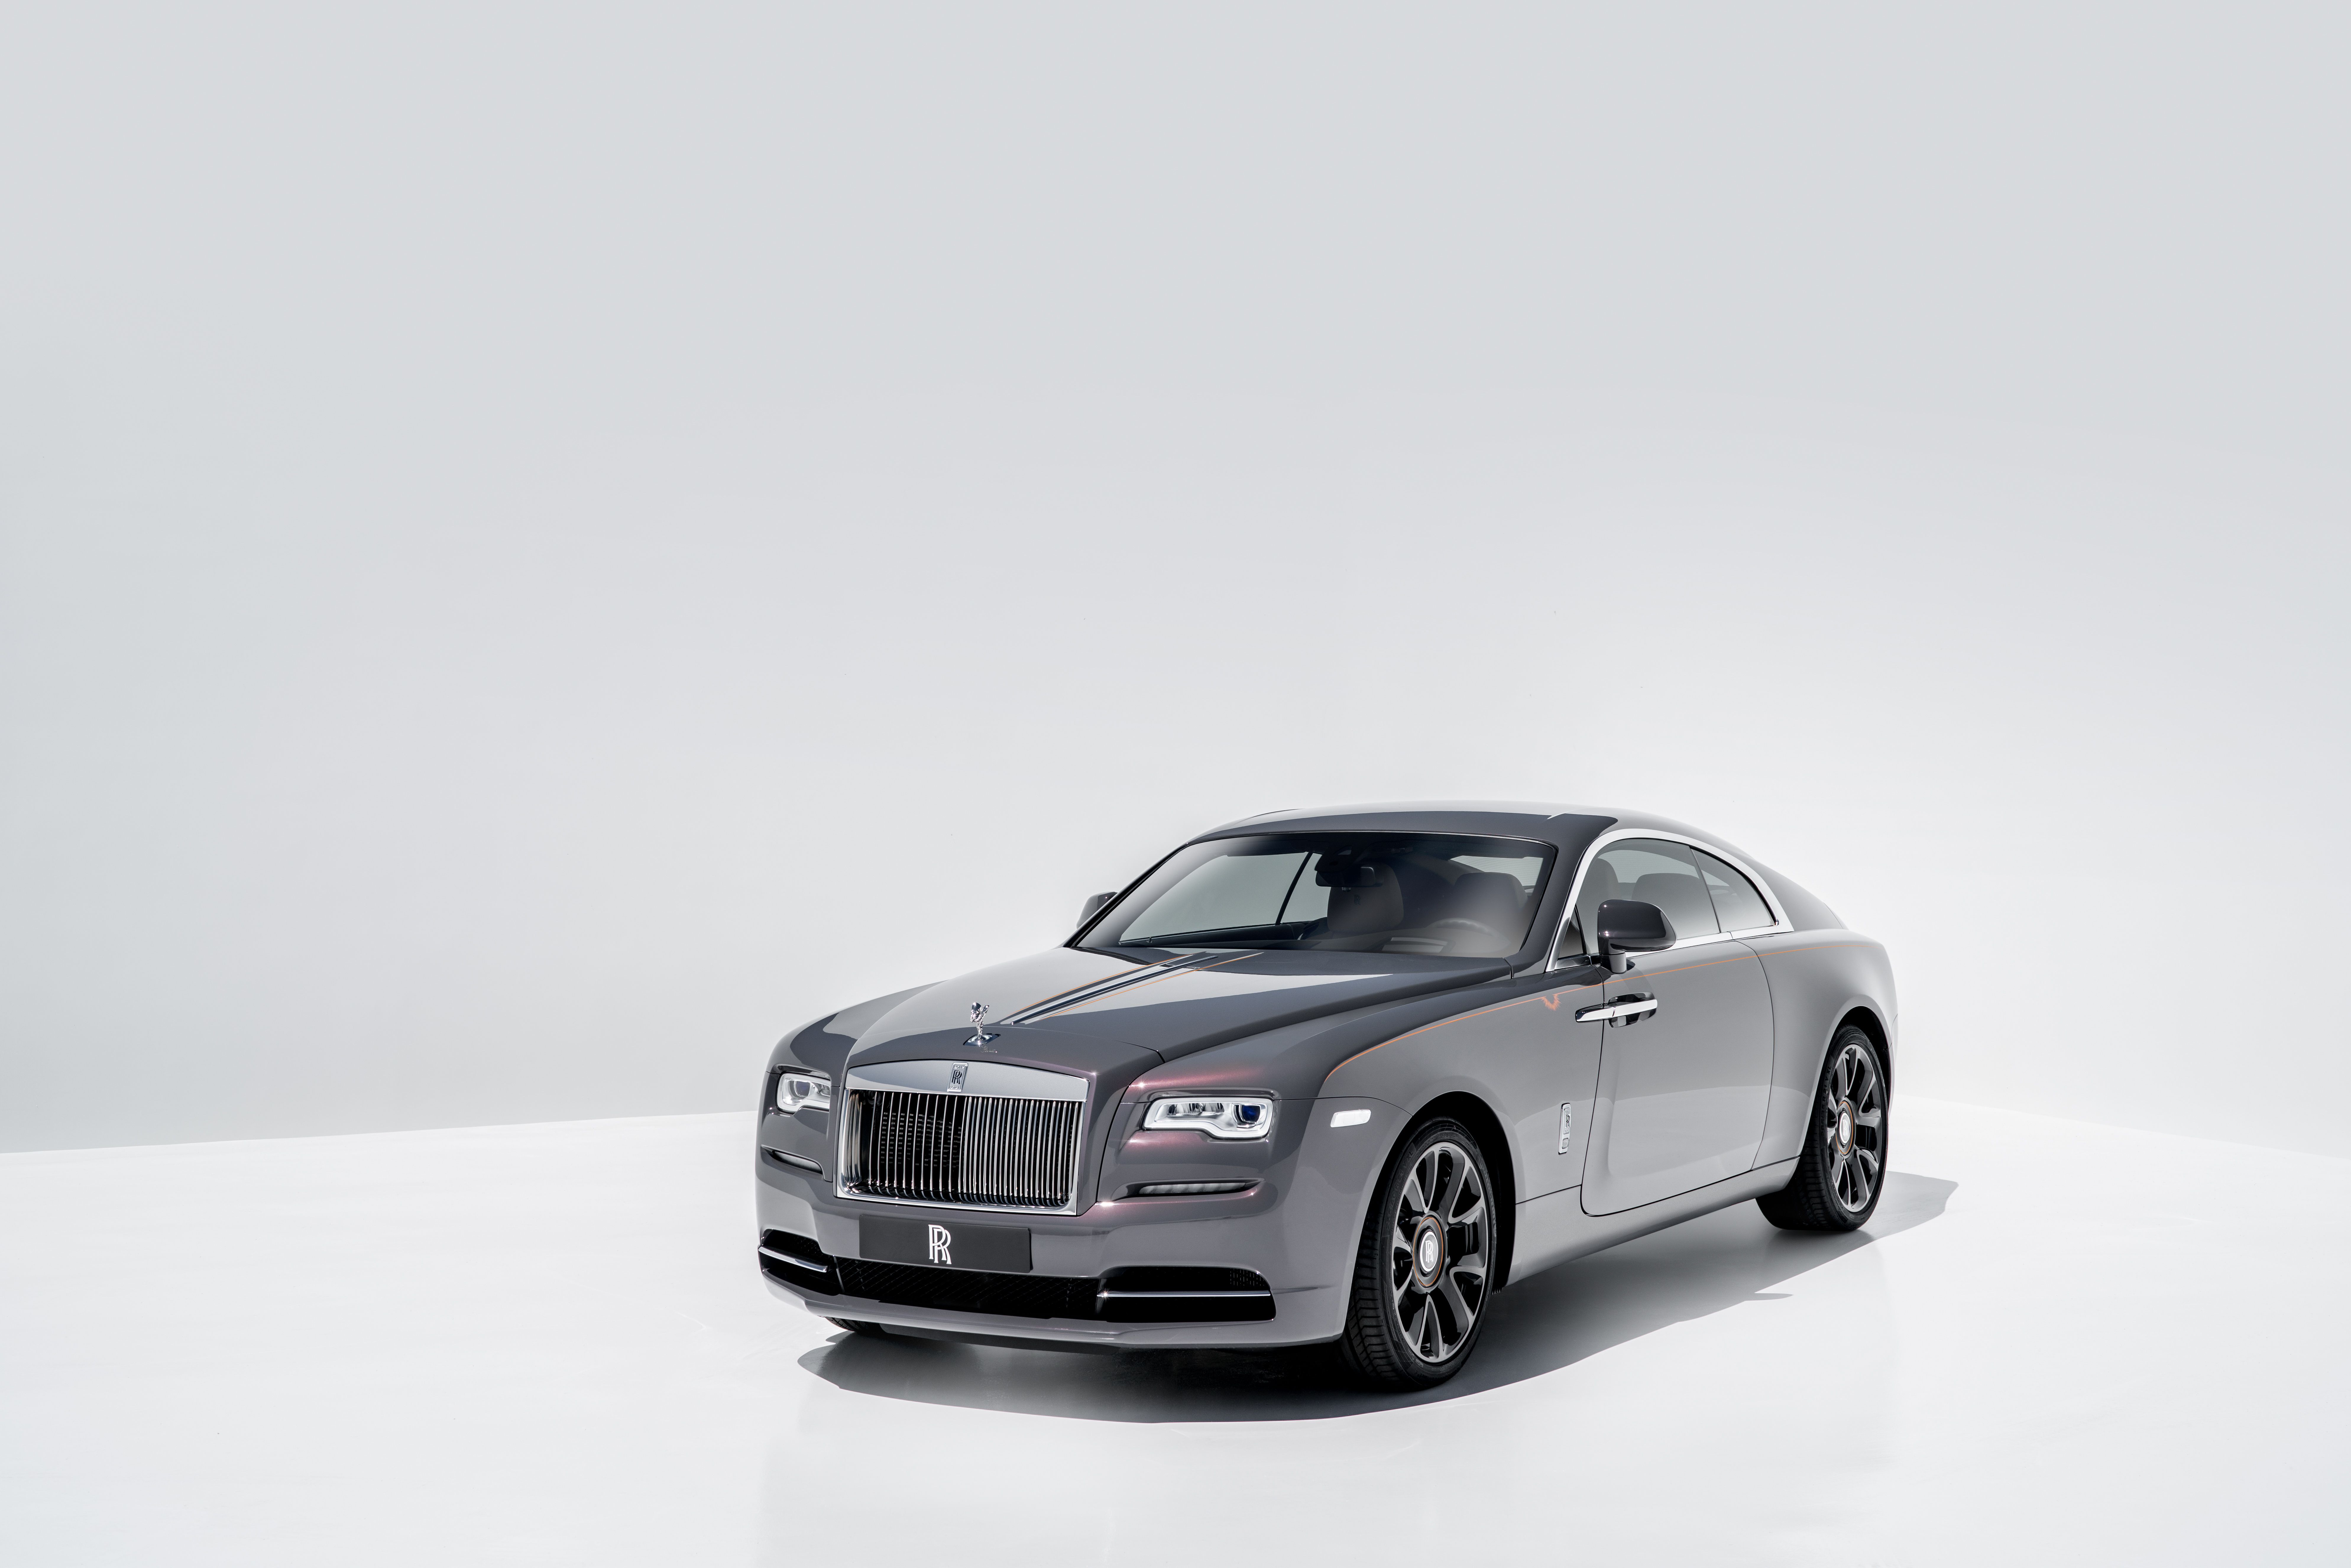 Rolls-Royce Wraith service experts